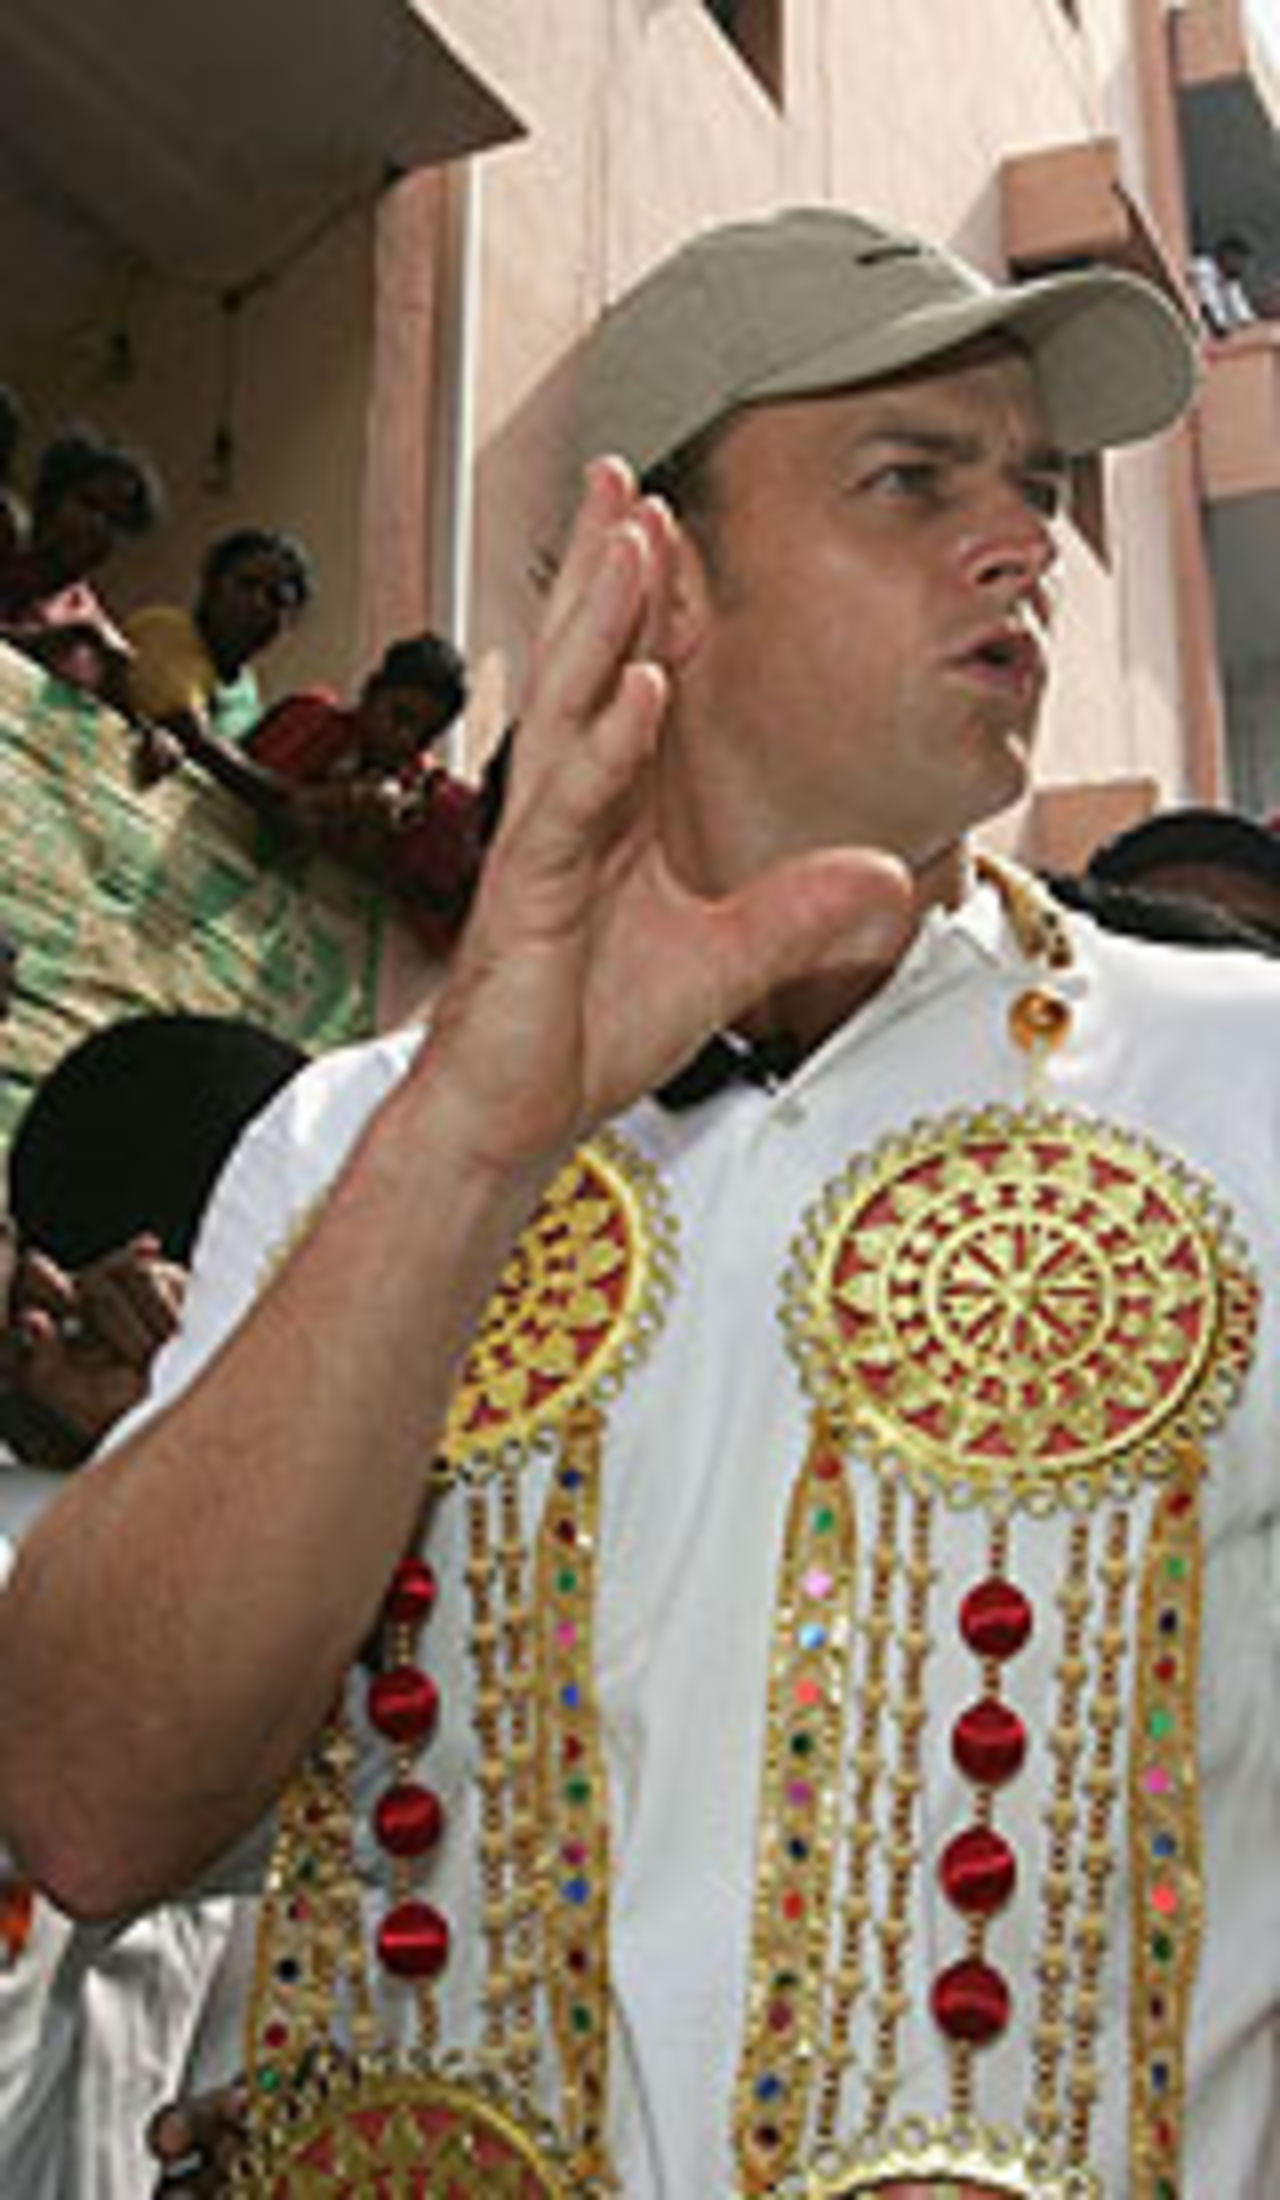 Adam Gilchrist visits a Chennai slum, October 11, 2004